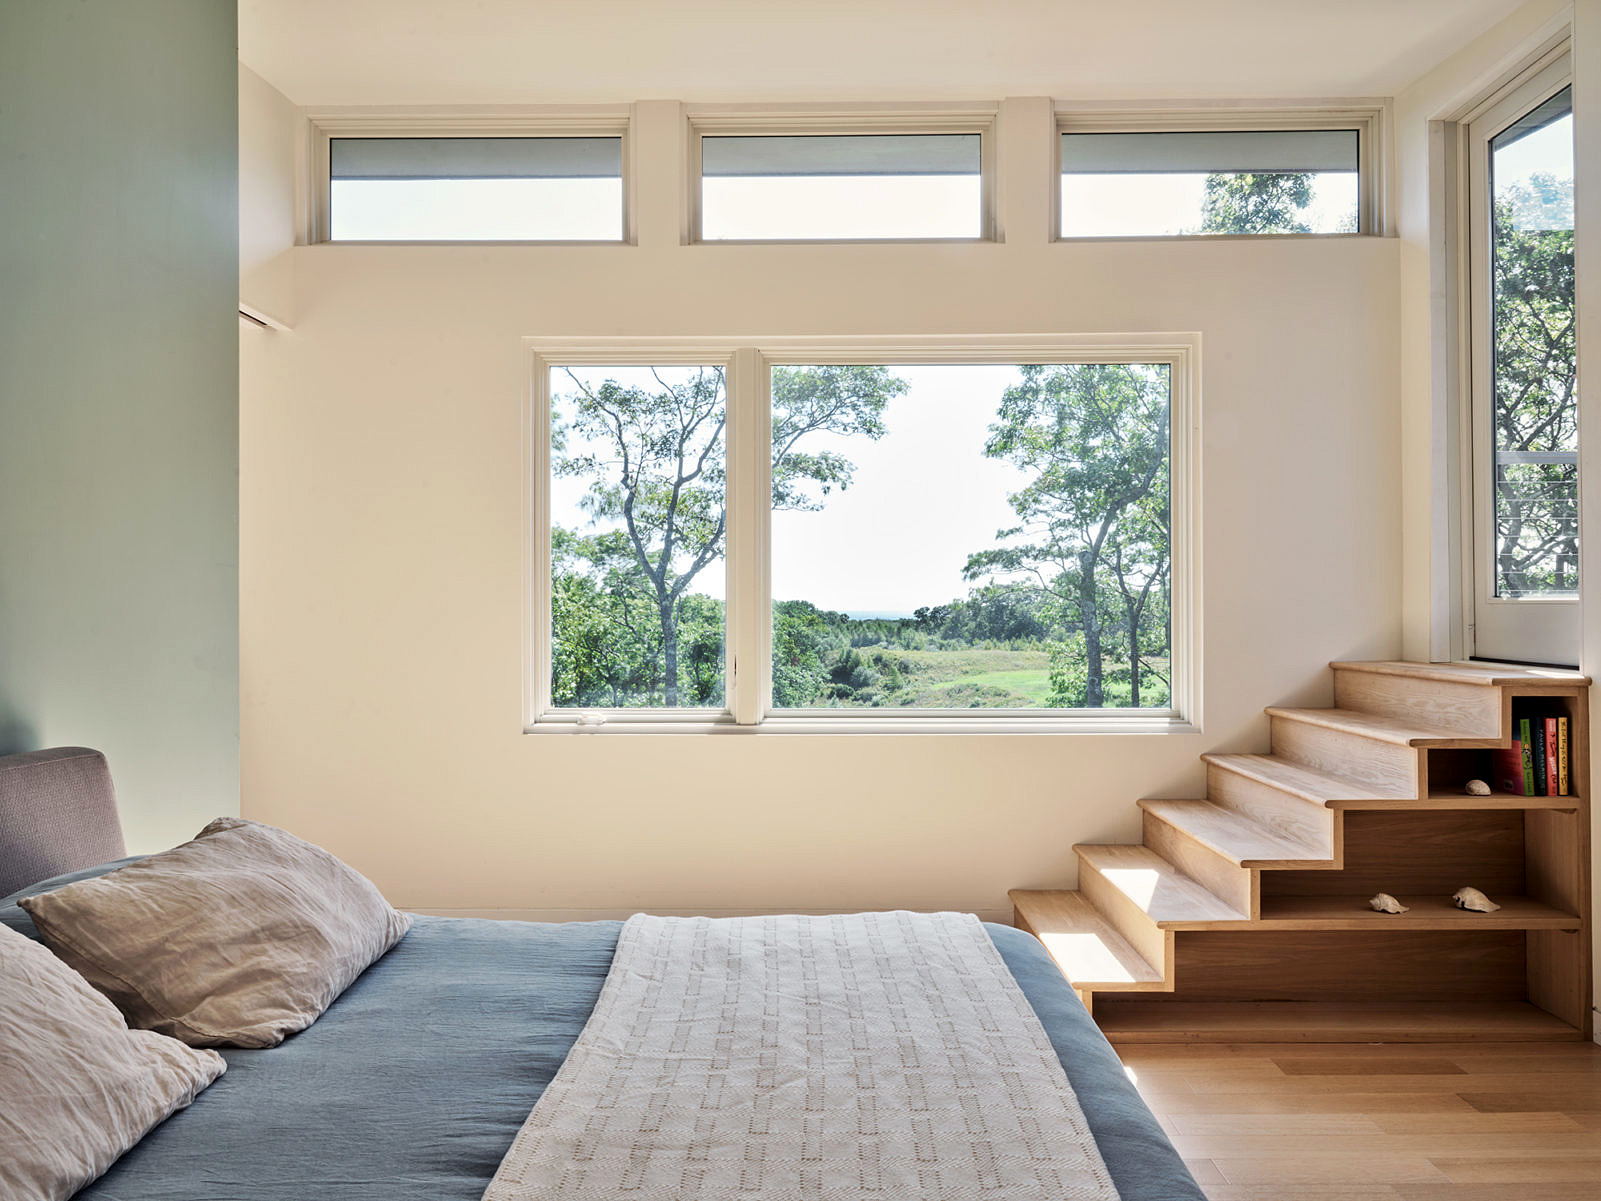 view of bedroom Ocean View House, Charlestown Rhode Island, Sarah Jefferys Architecture + Design